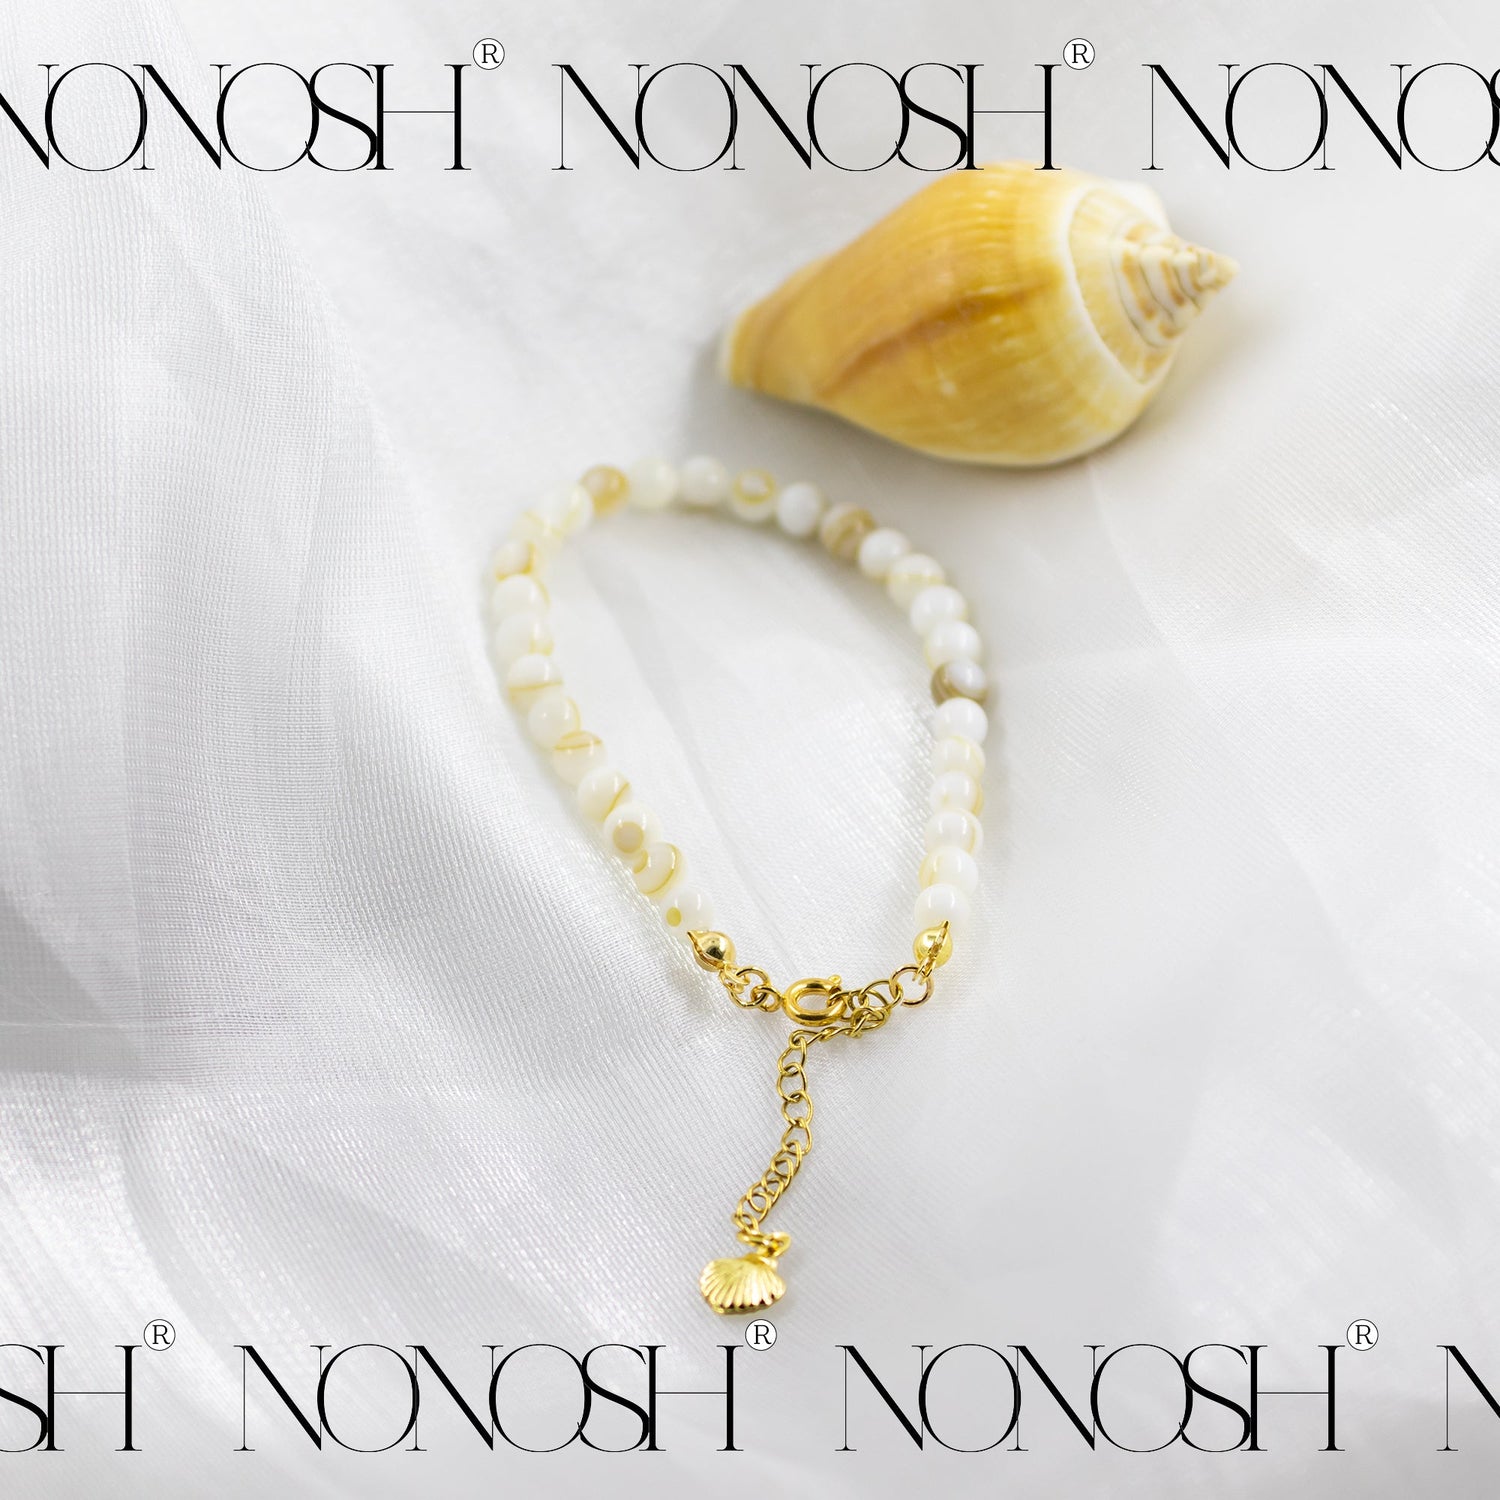 Perlmutt / Muschel Armband - NONOSH